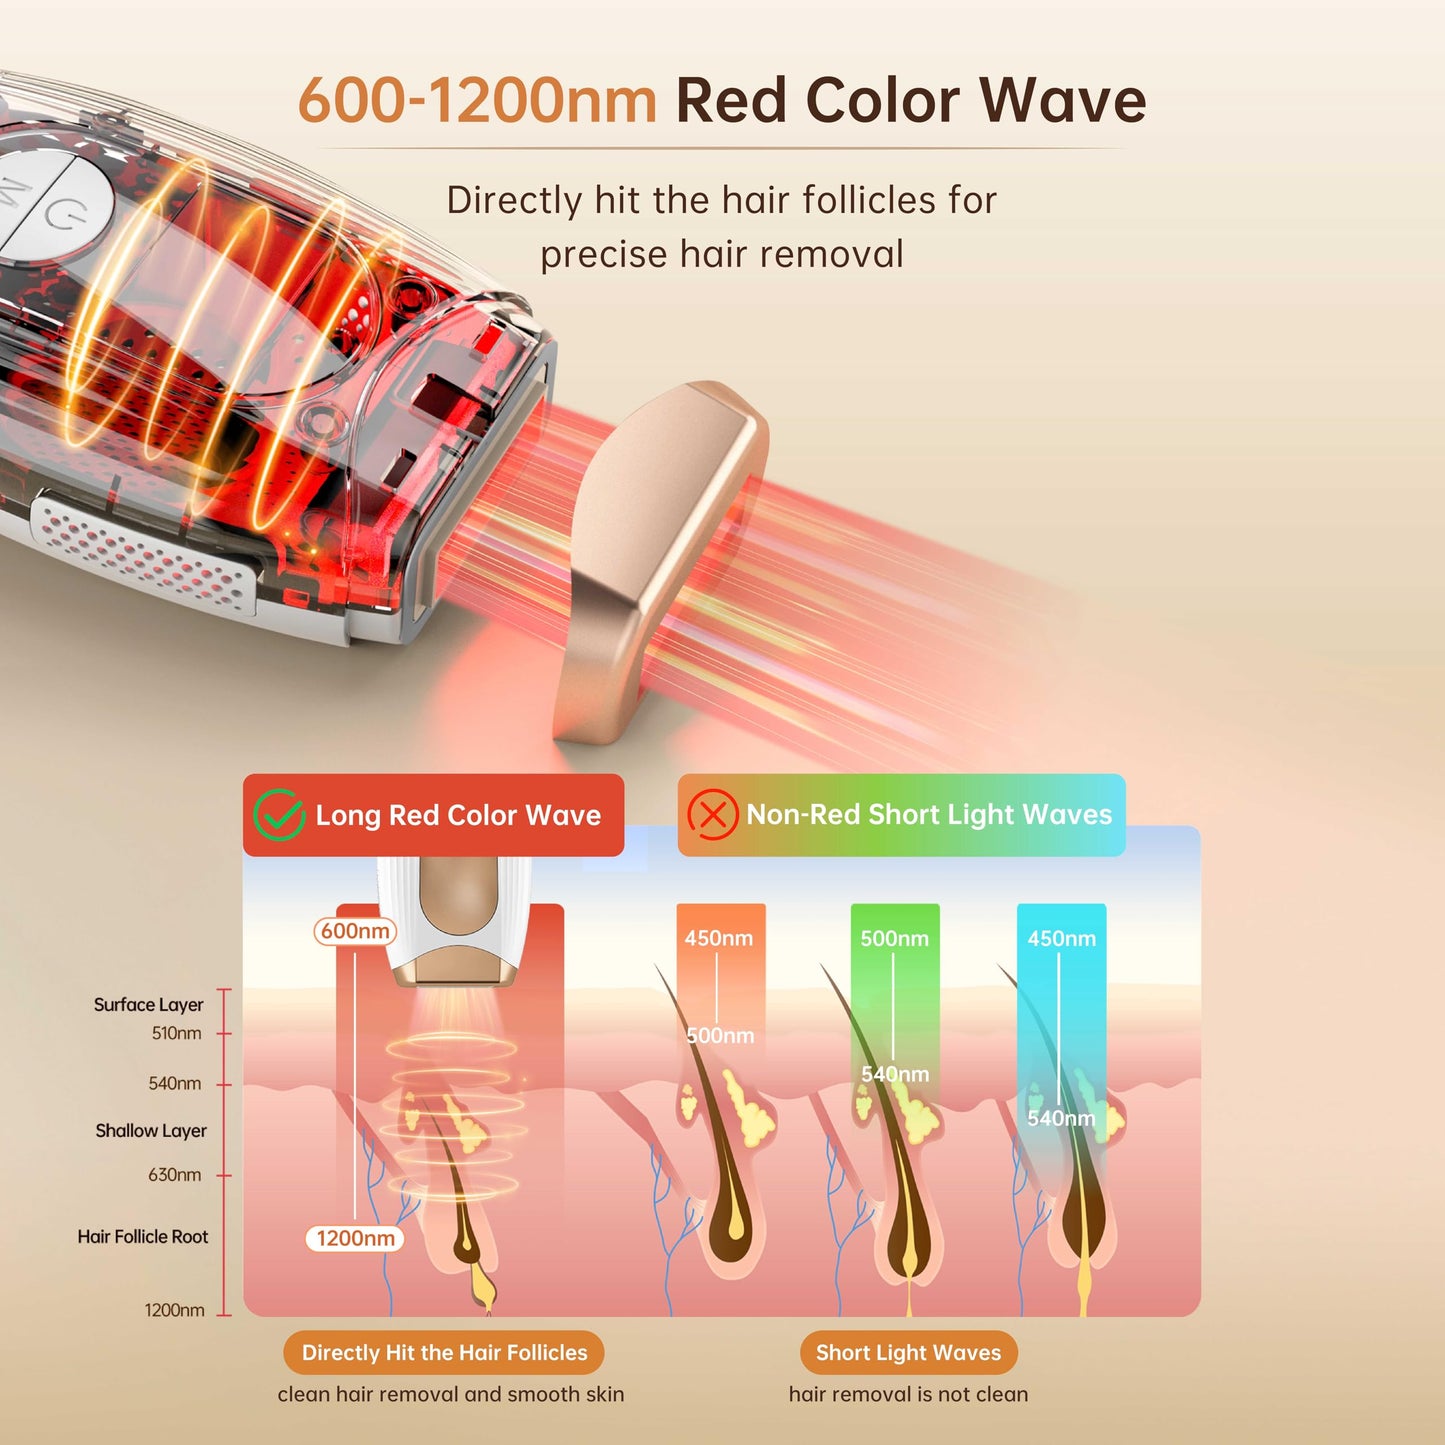 FZ-200A Laser Hair Removal $59.99 After 5YI5O9KI At Amazon prime day!